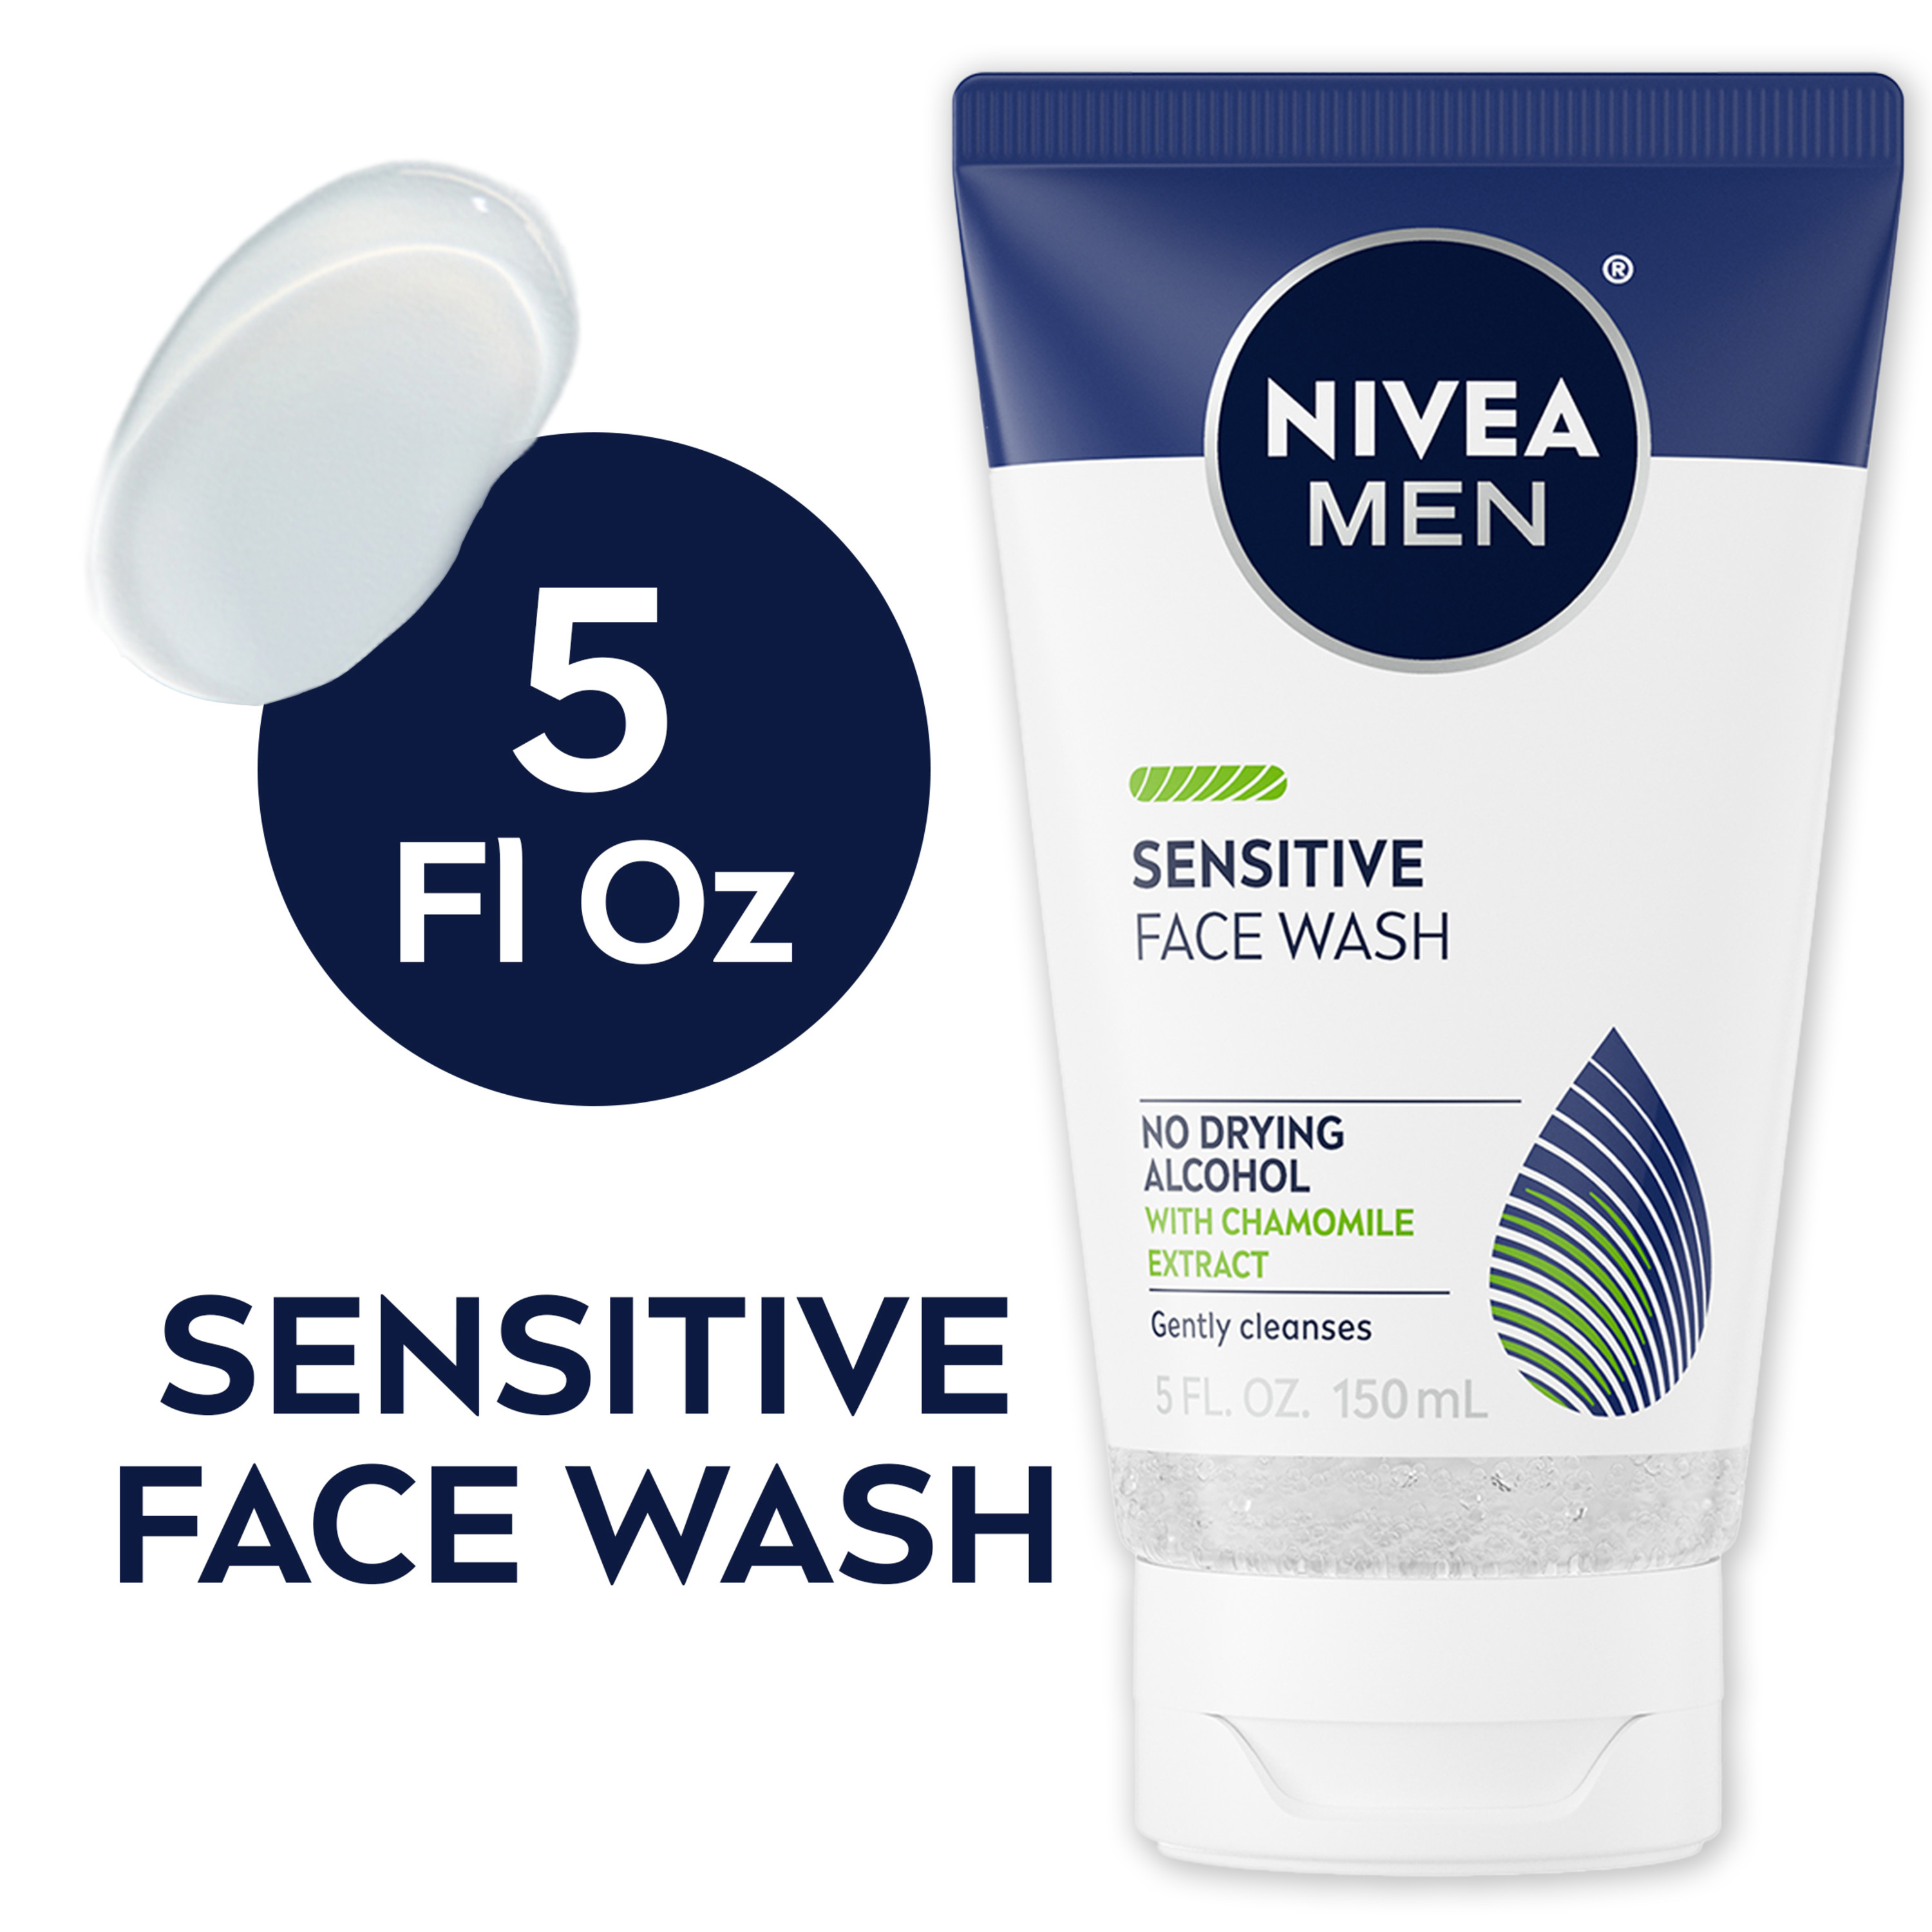 NIVEA MEN Sensitive Face Wash, with Vitamin E, Chamomile and Witch Hazel, 5 Fl Oz Tube - image 1 of 10